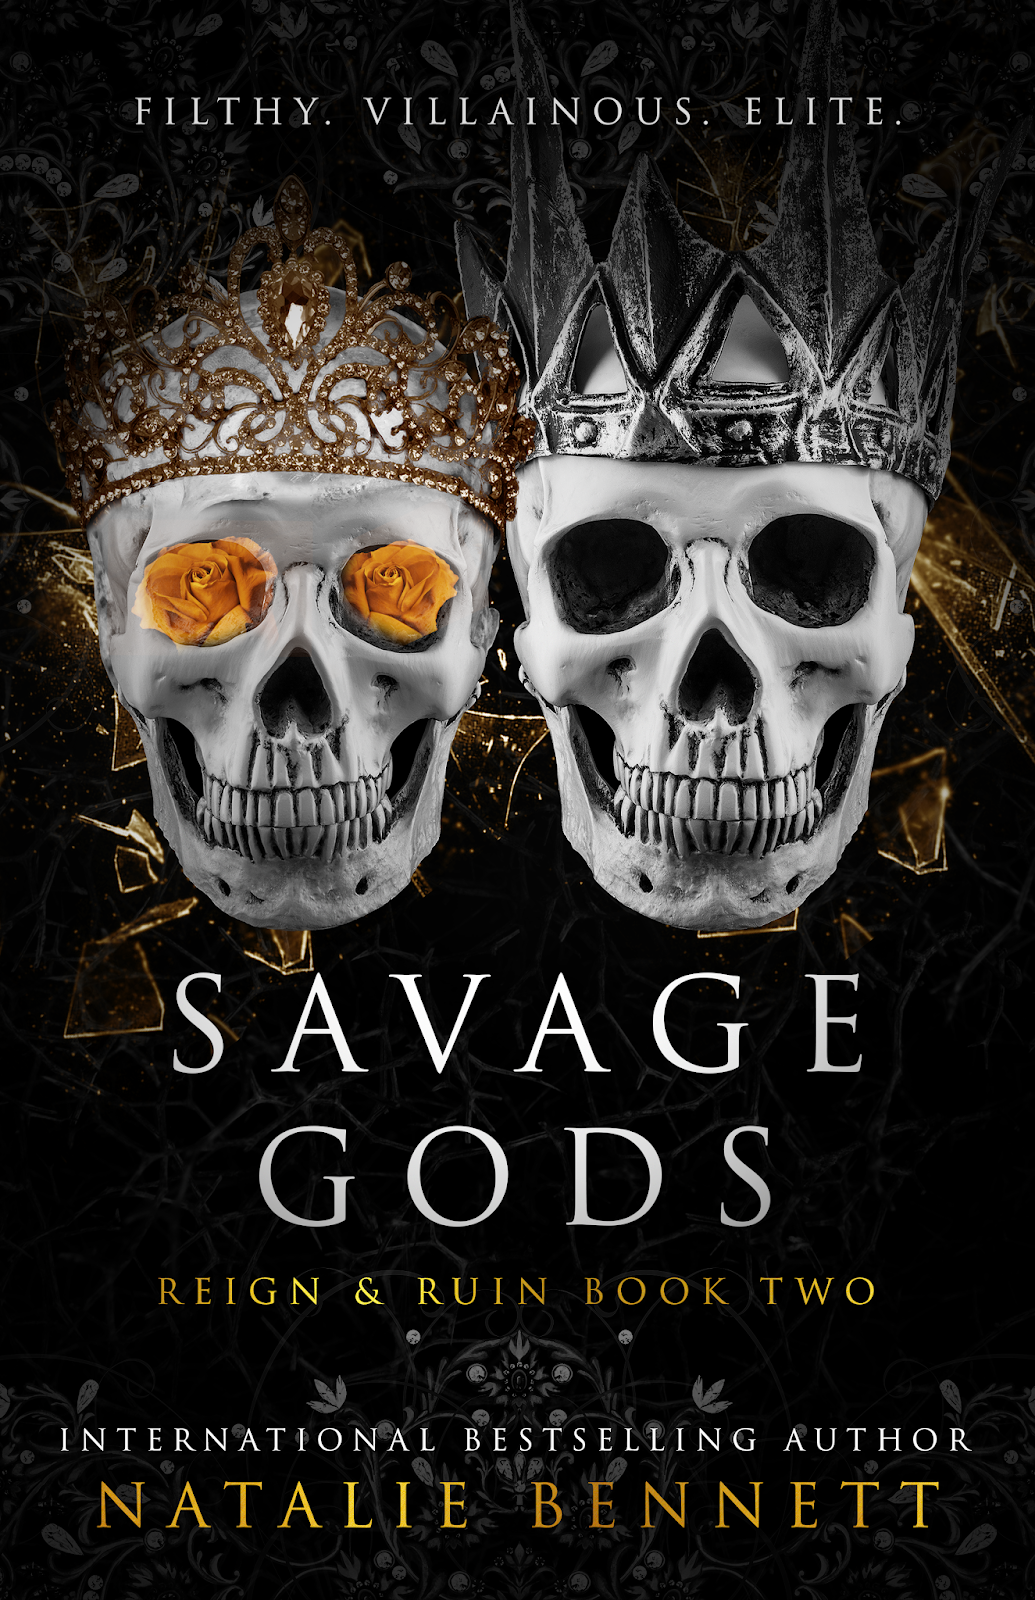 Gods reign. Savage Reign. Natalie Bennett Savages. Queen of Ruin книга.